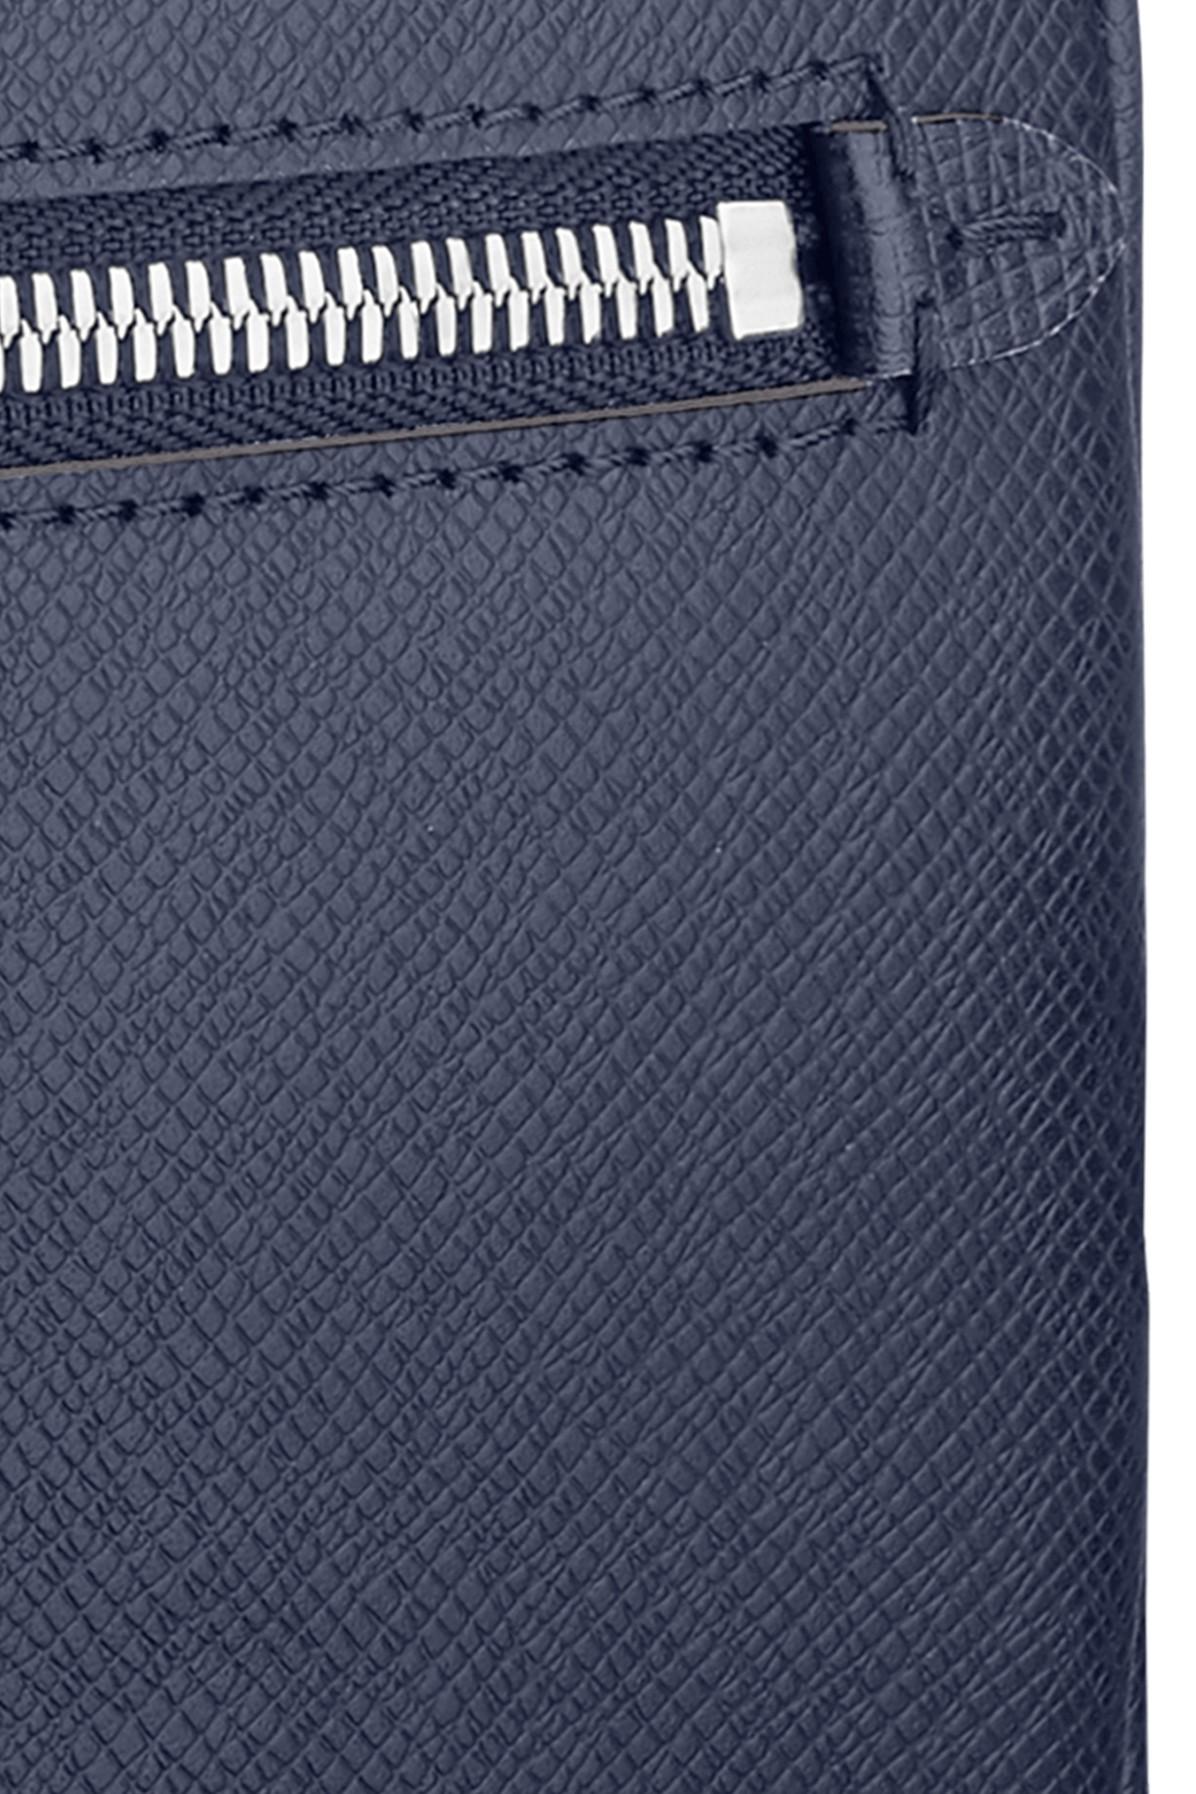 M51823 Louis Vuitton Fall-Winter 2018 Kasai Clutch-Taurillon Leather